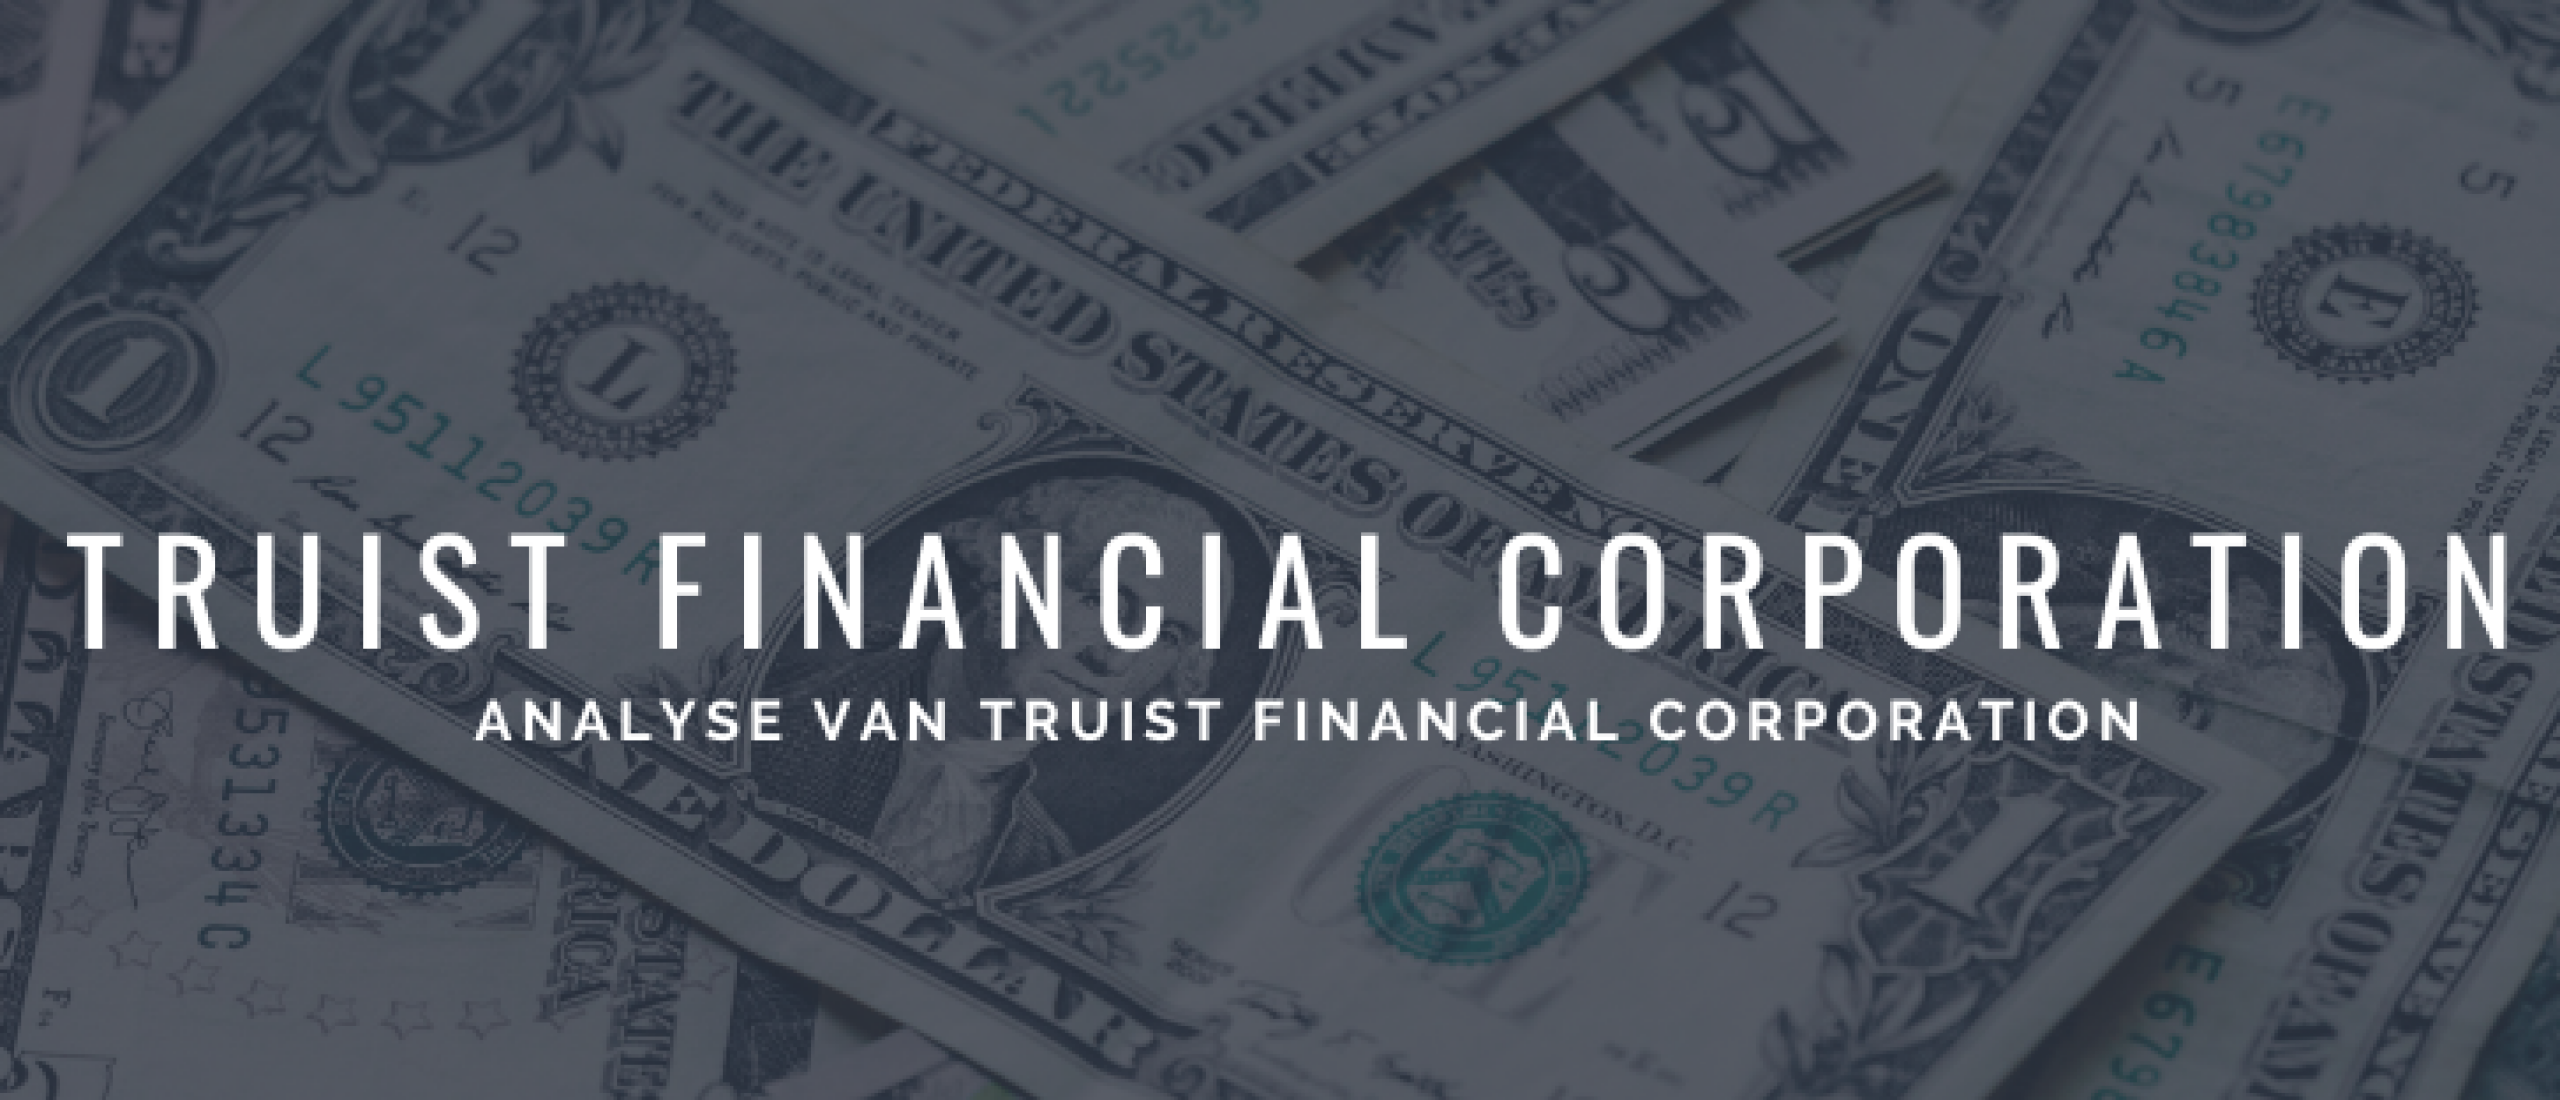 truist-financial-corporation-